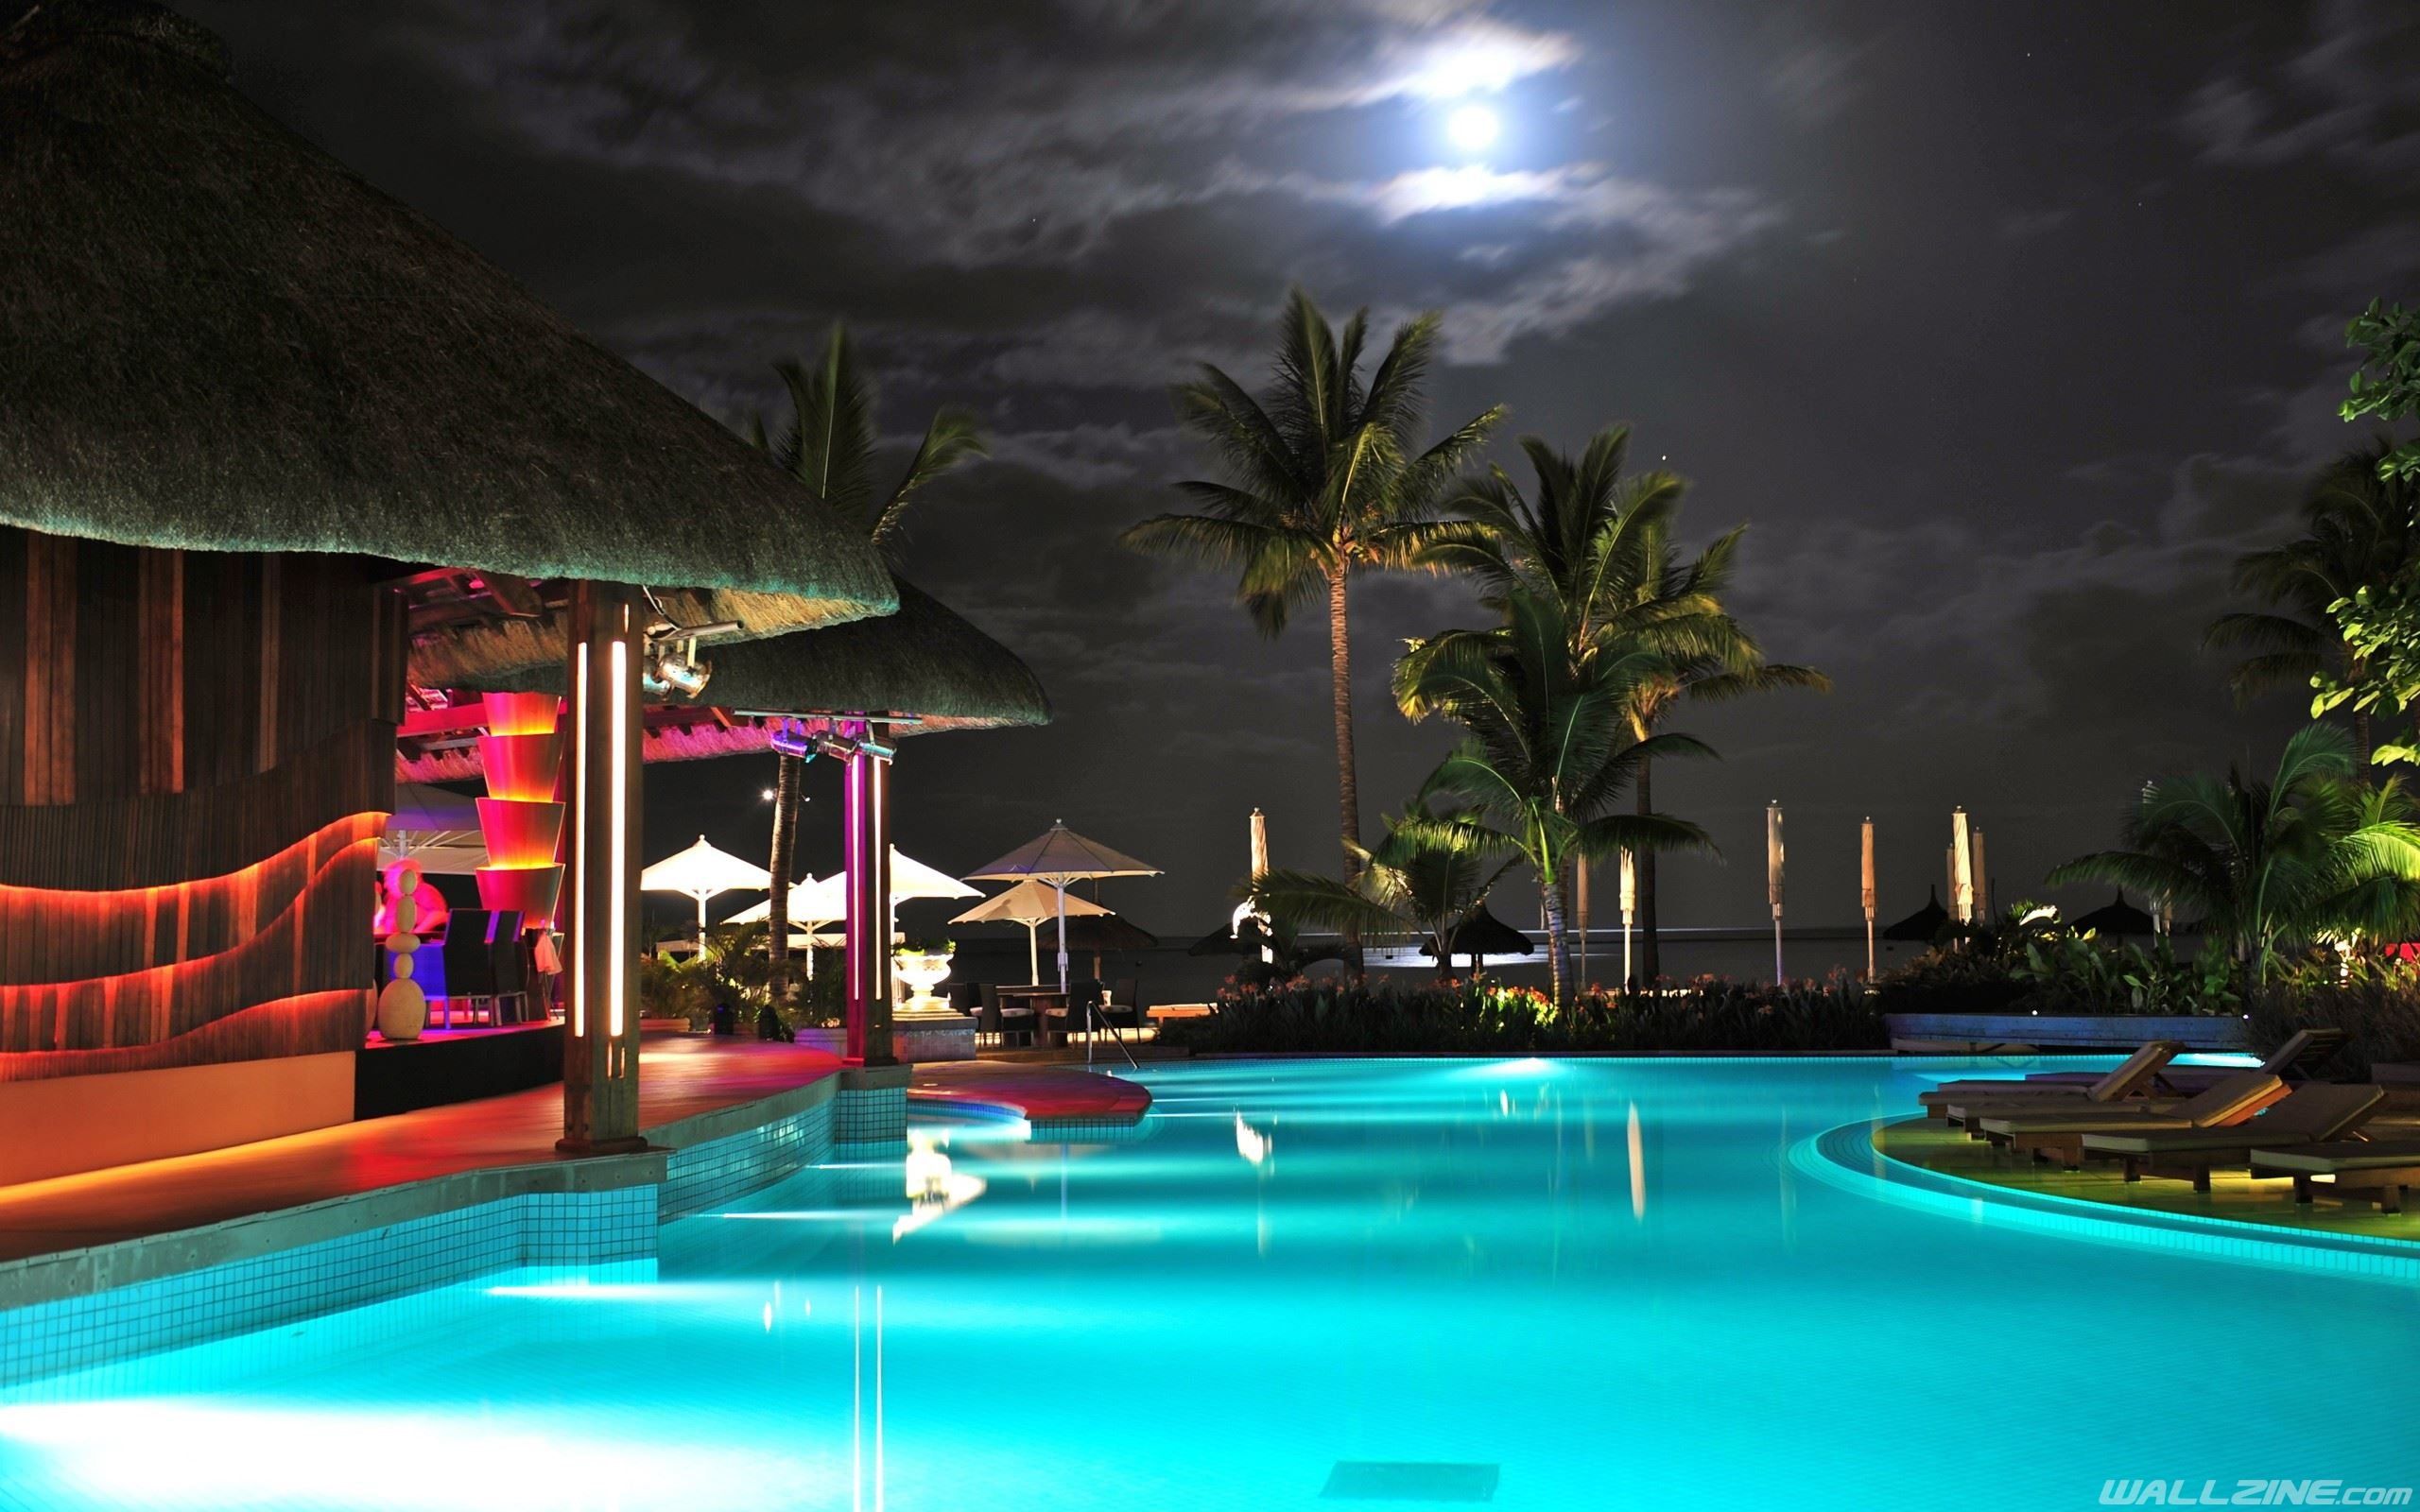 Luxury Resort Pool HD Desktop Wallpaper. Wallzine.com. Resort pools, Pool at night, Luxury resort